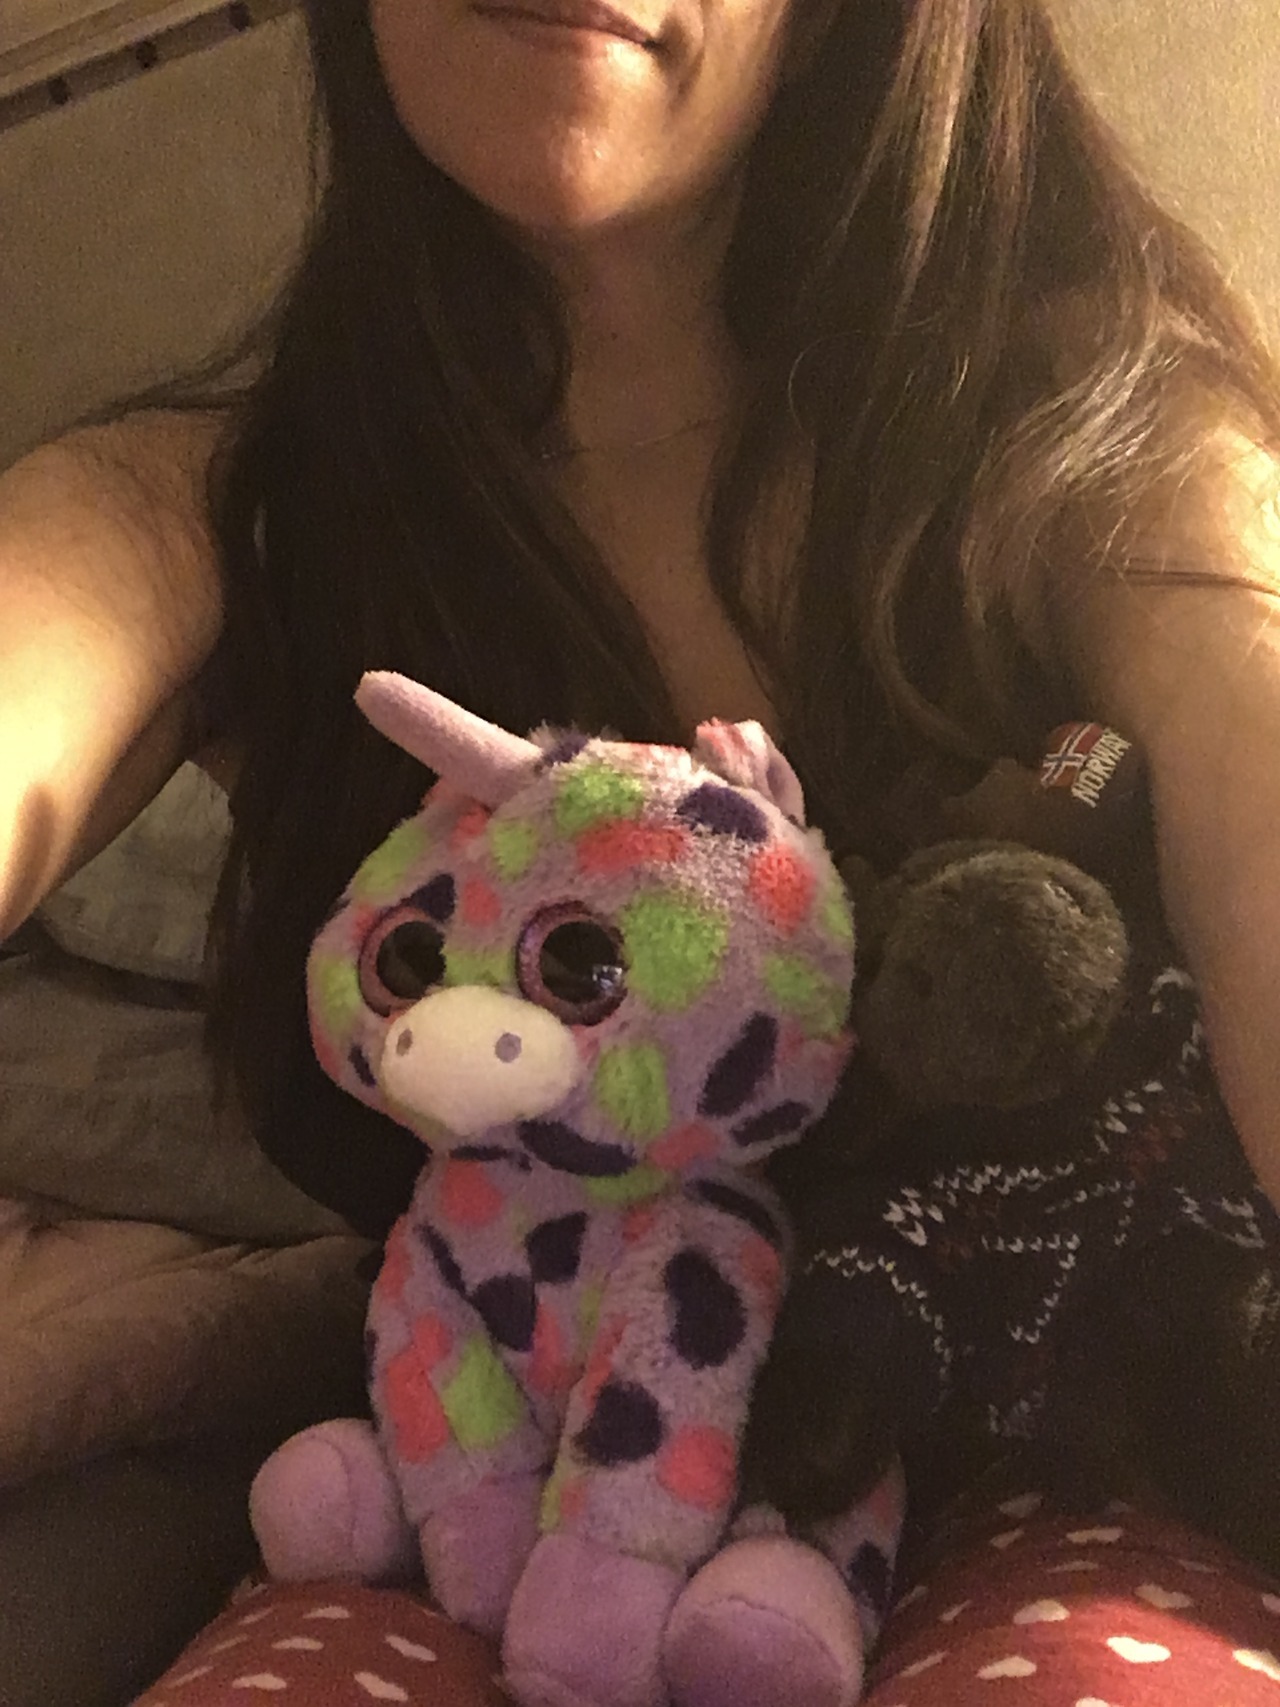 sassysparkledoc: My new unicorn stuffie, Sparkle, and of course, Mini Moose. We’re